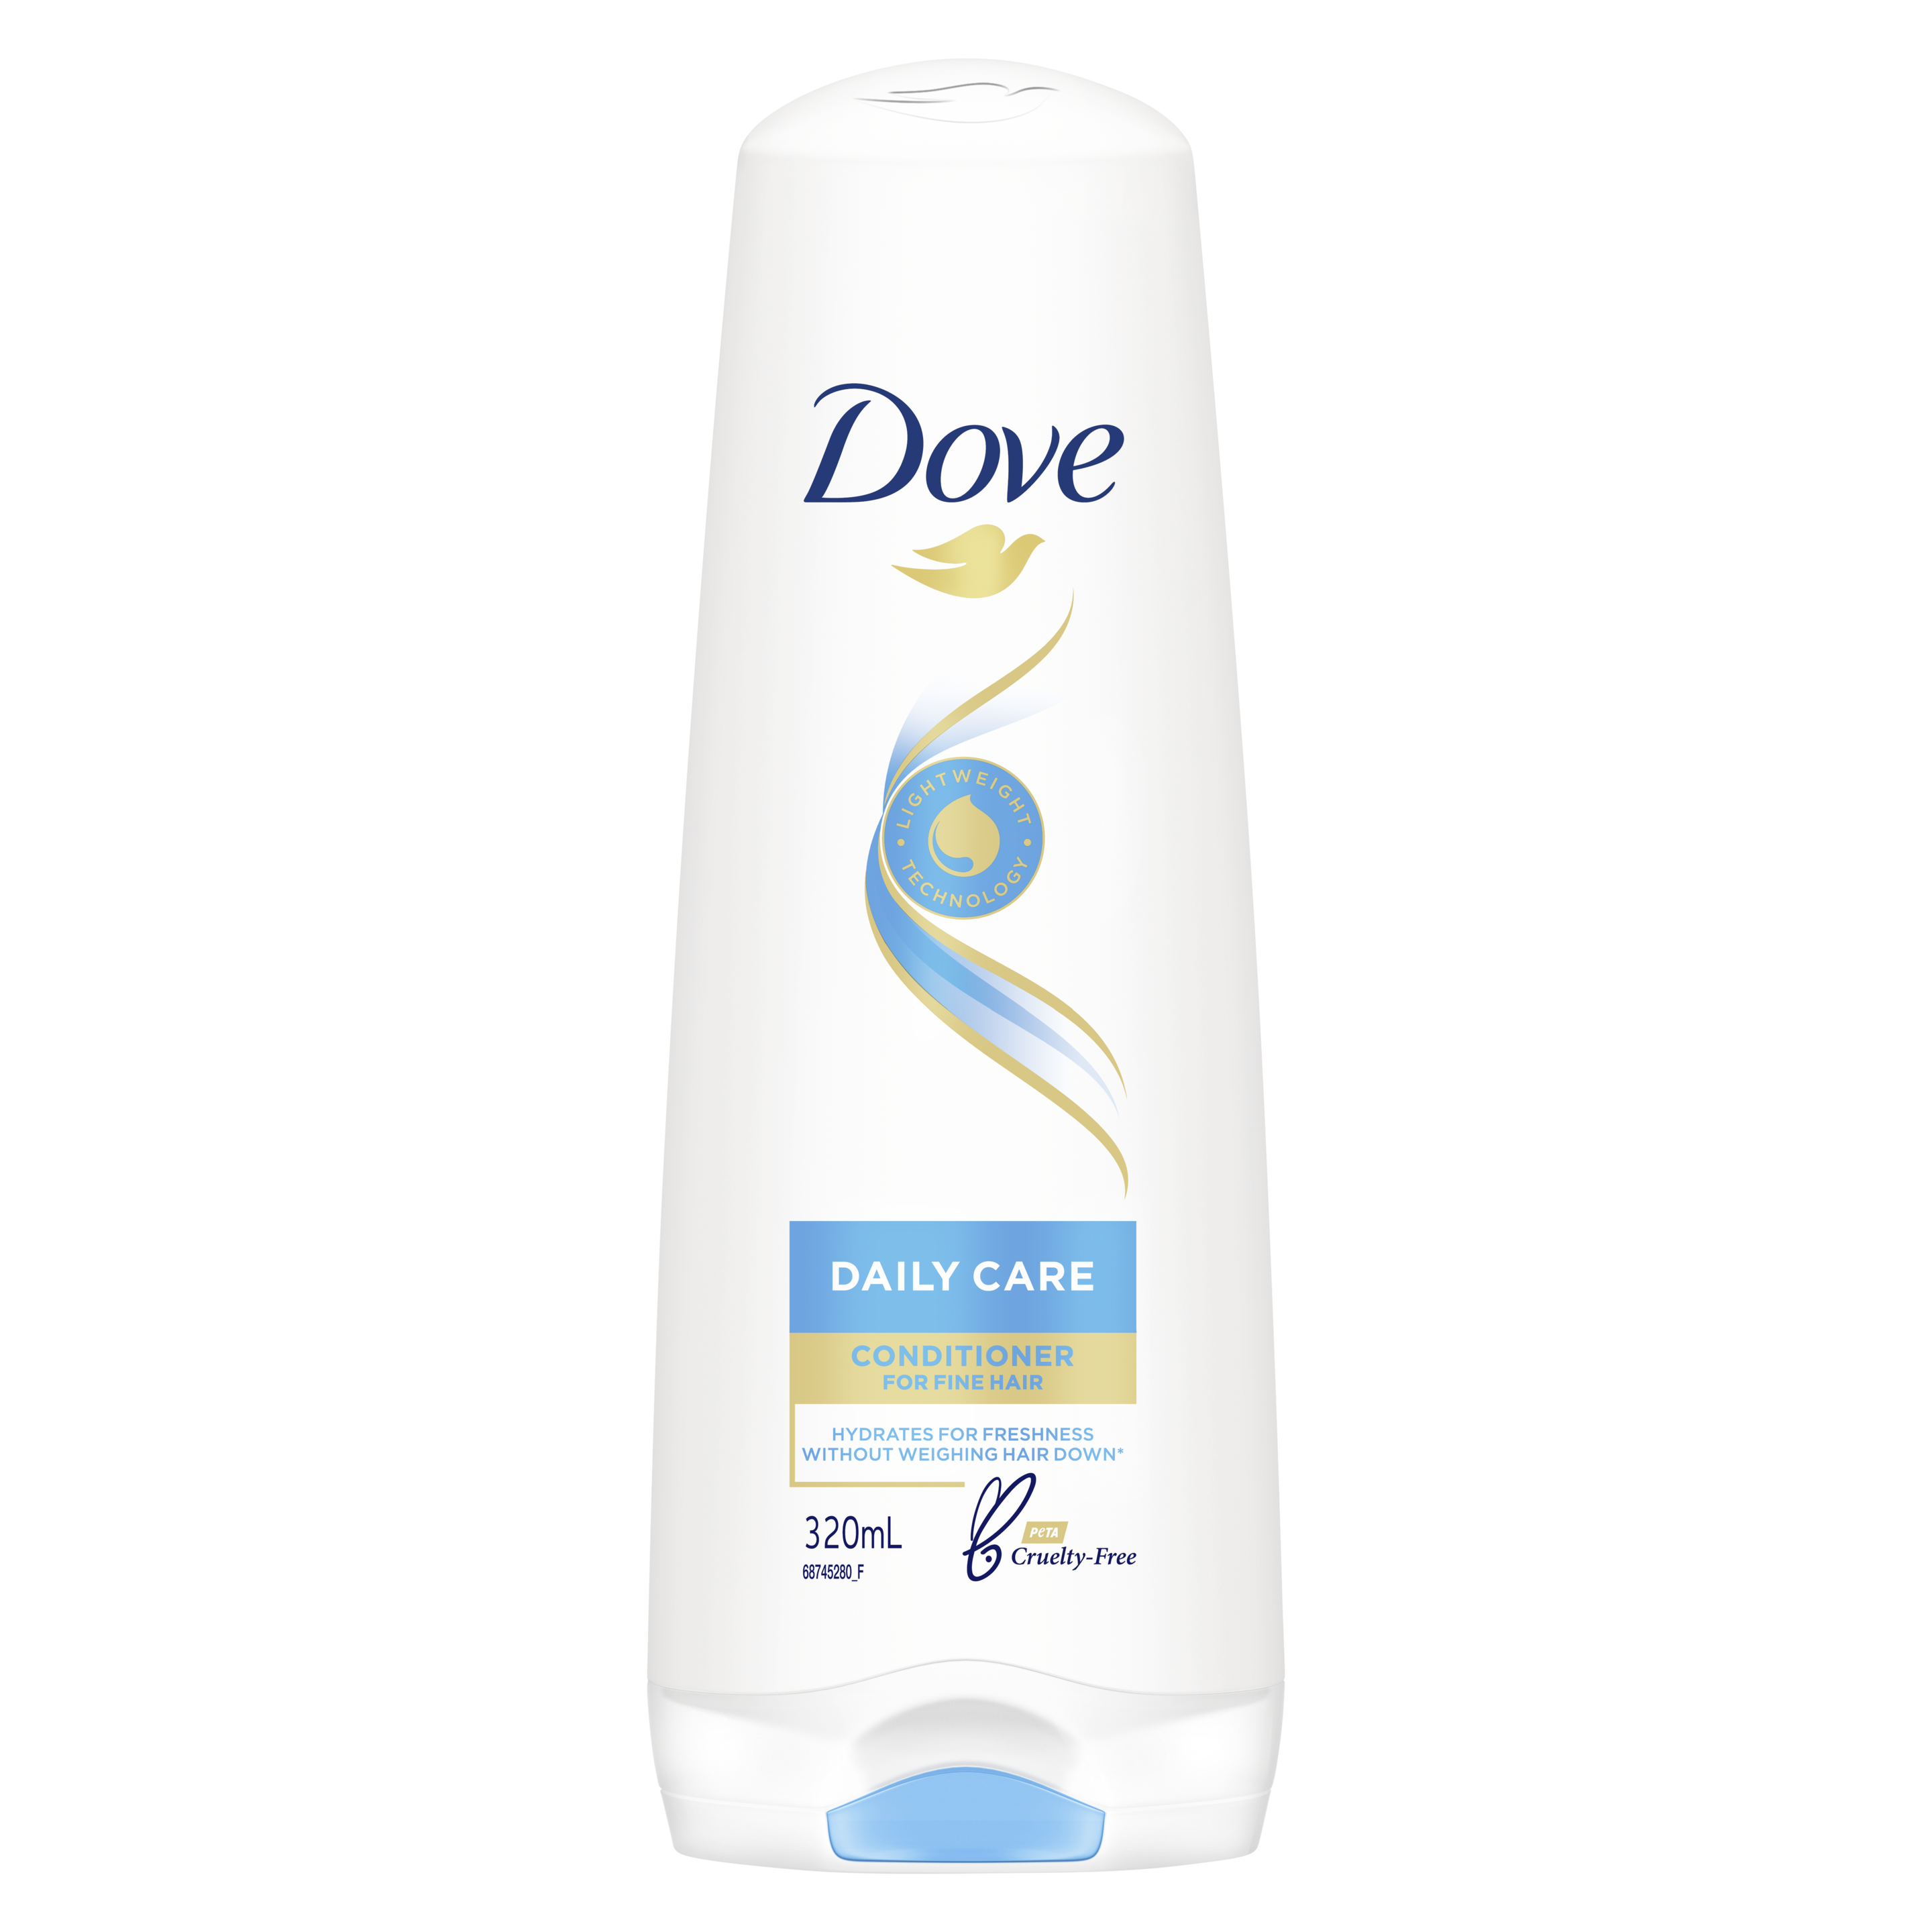 Dove Daily Care Conditioner 320ml Text